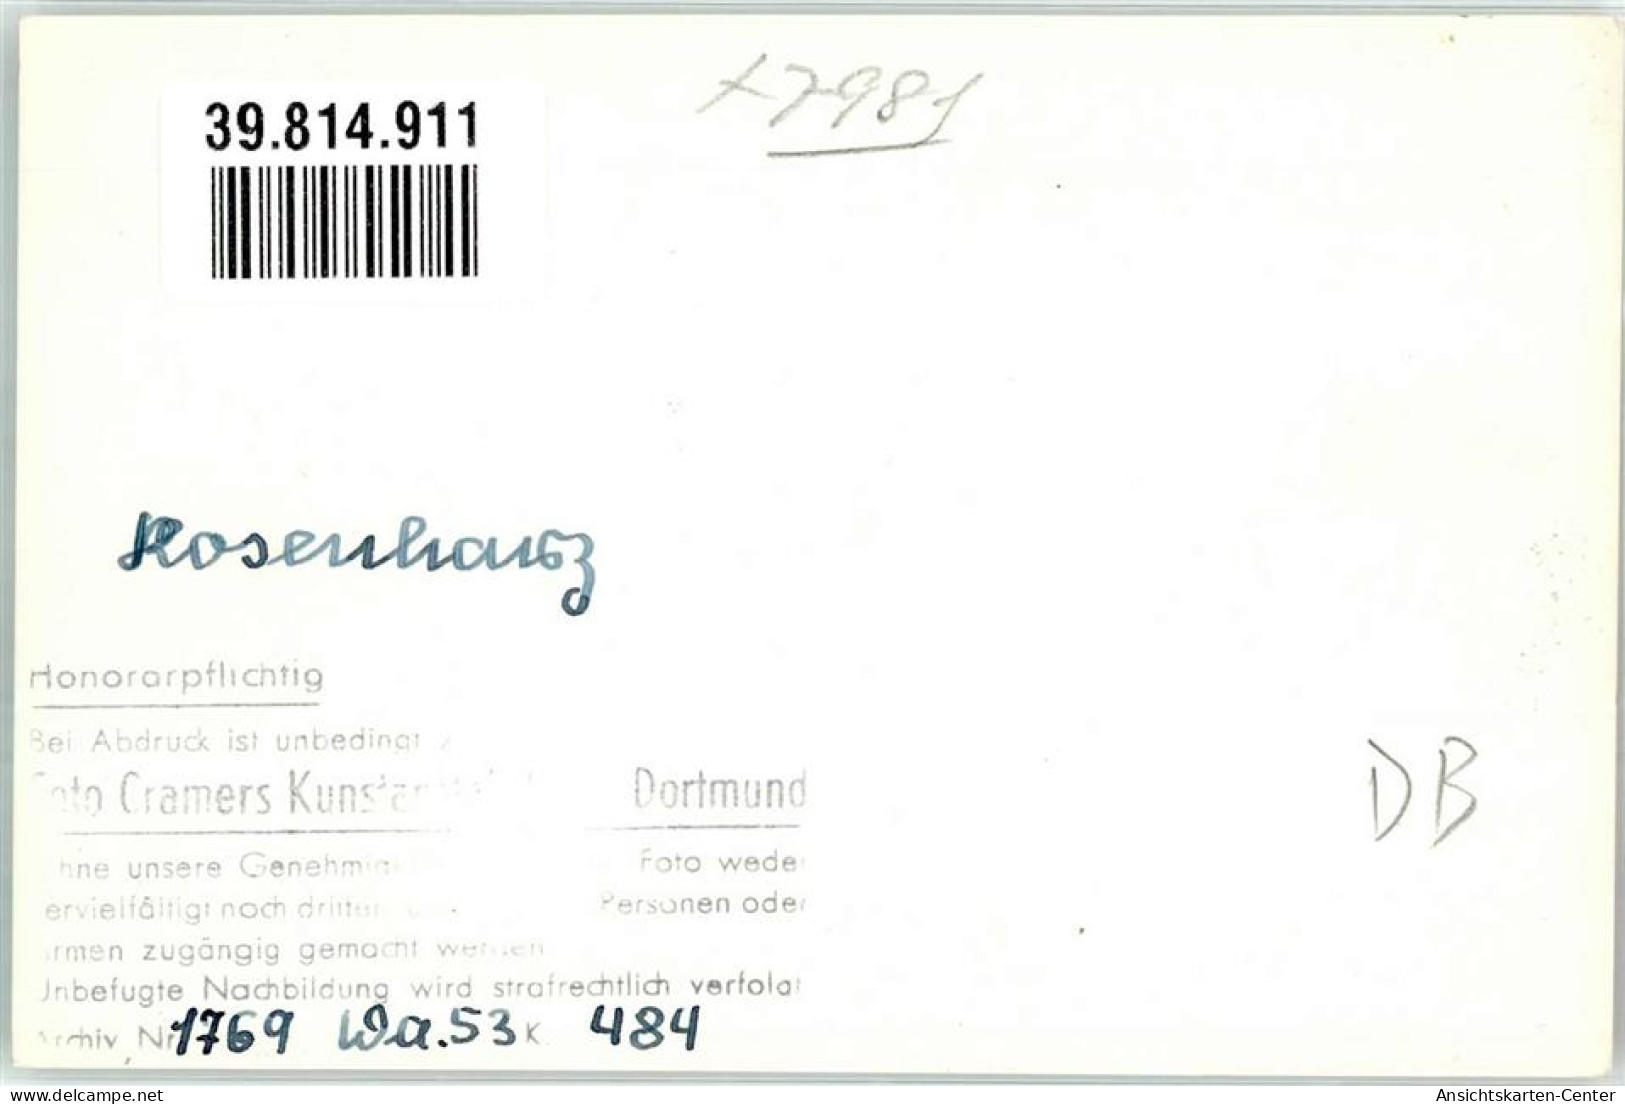 39814911 - Rosenharz - Ravensburg